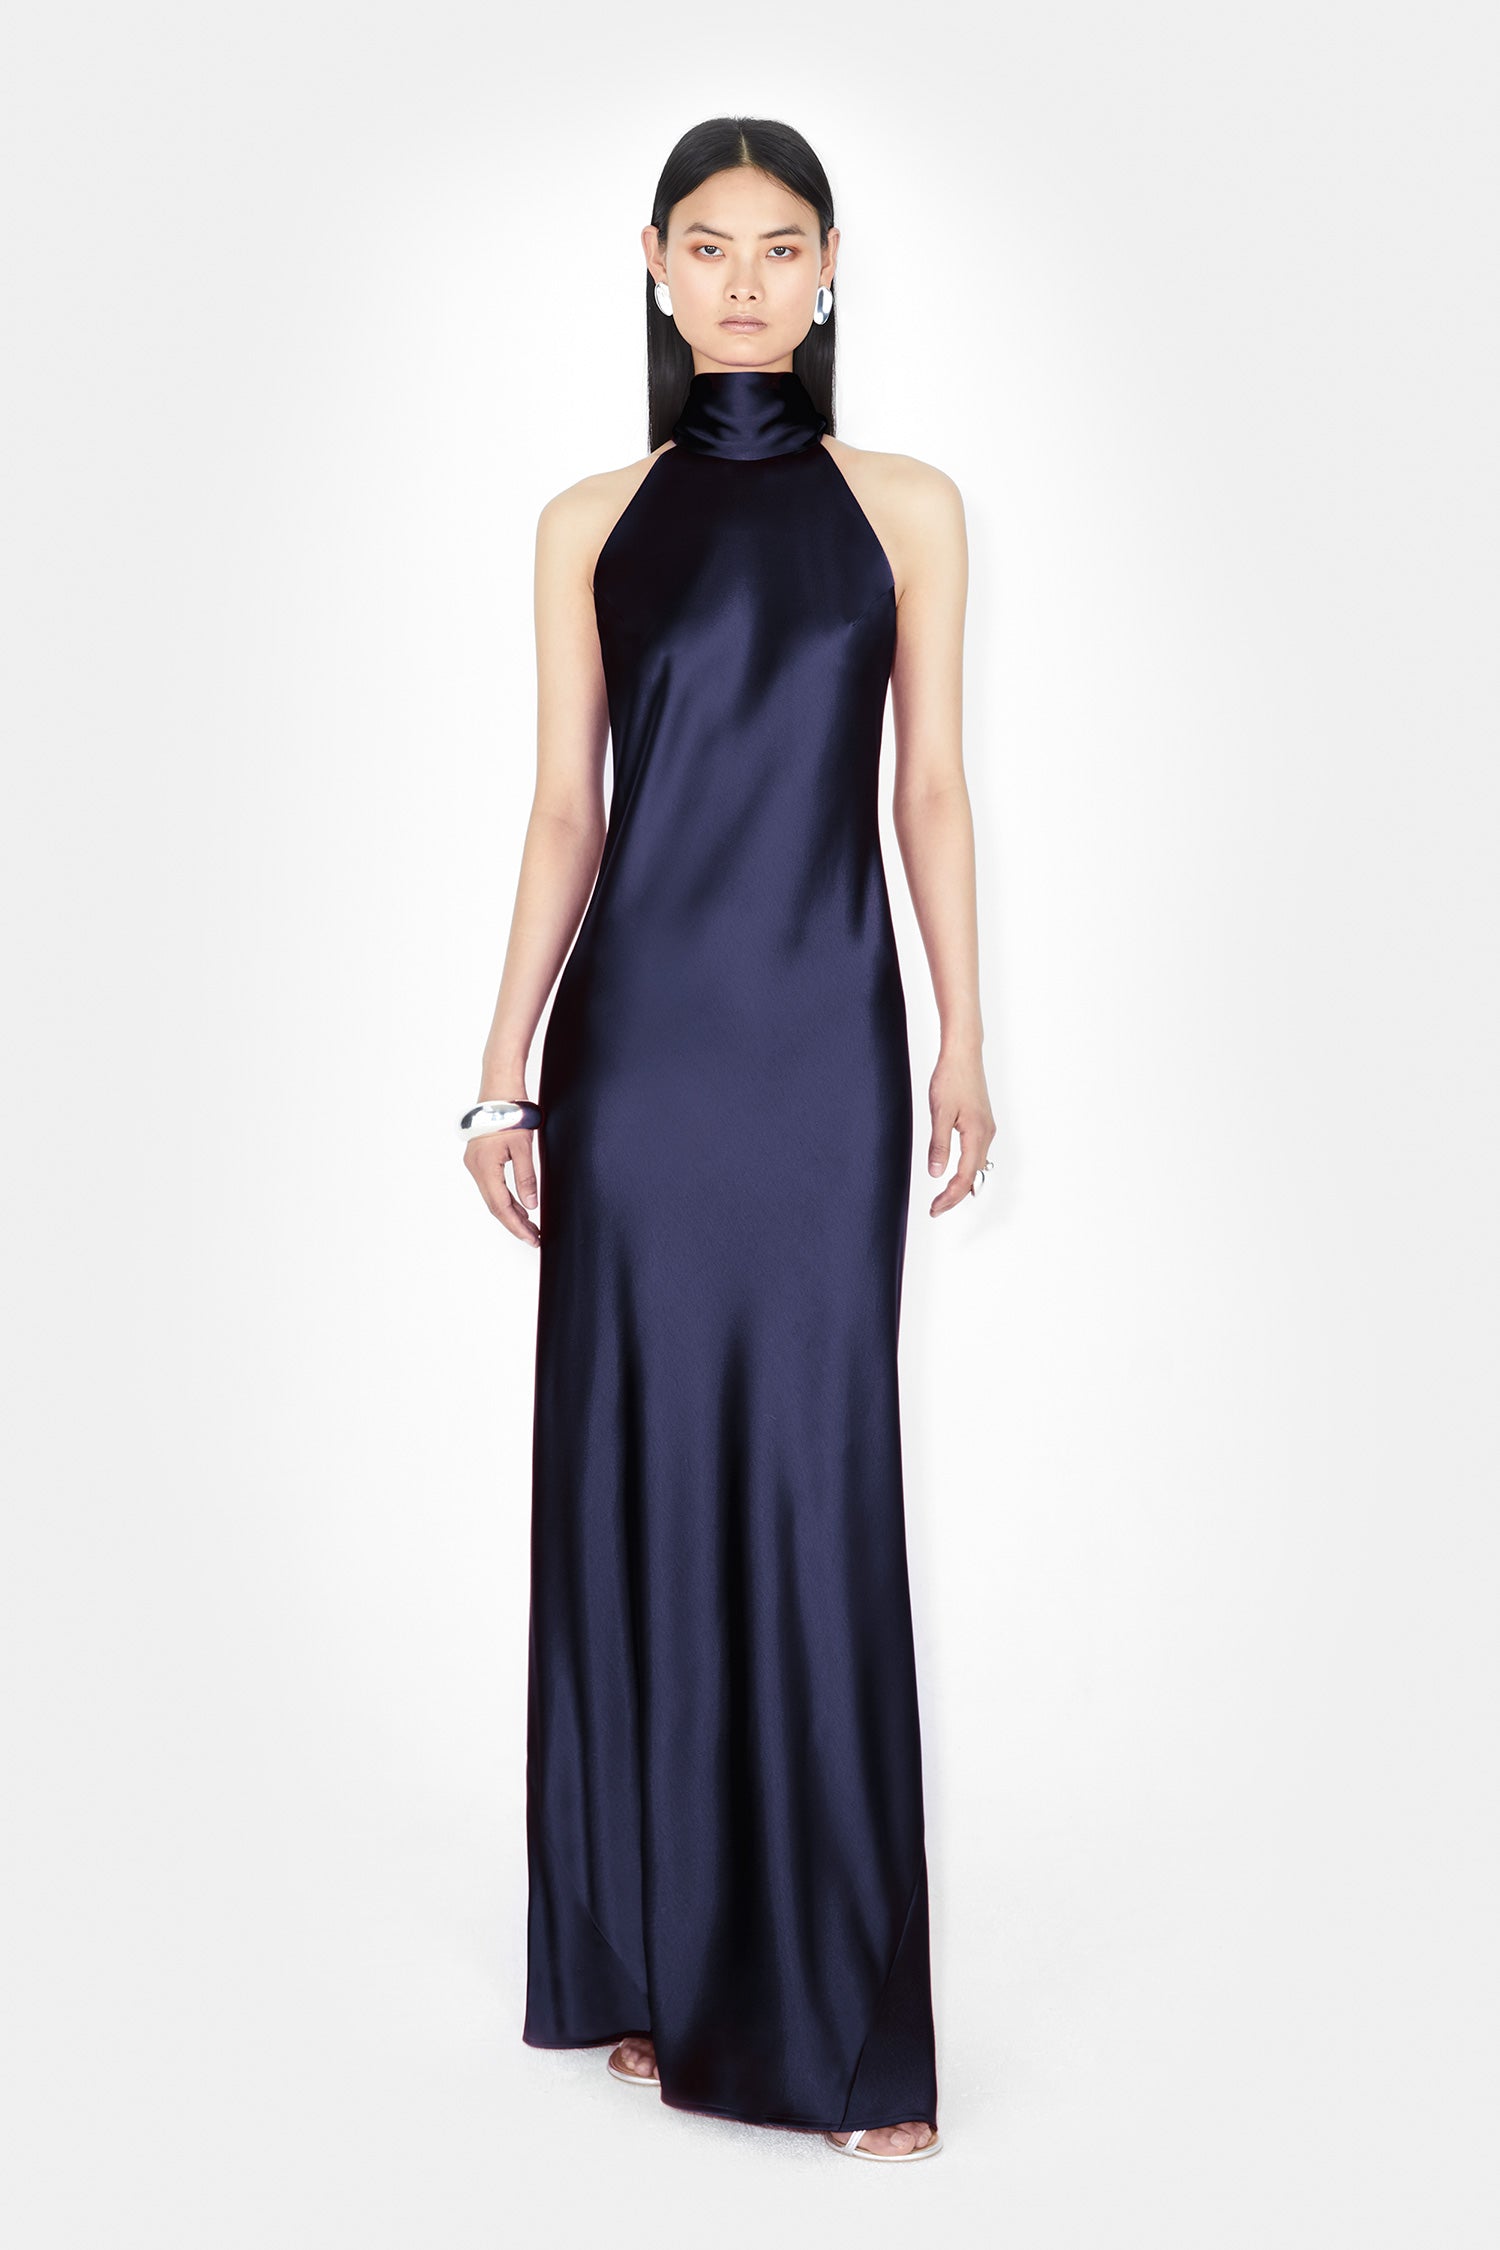 Designer Satin Midnight Halterneck Bias Cut Dress Luxury Eveningwear Dress Galvan London